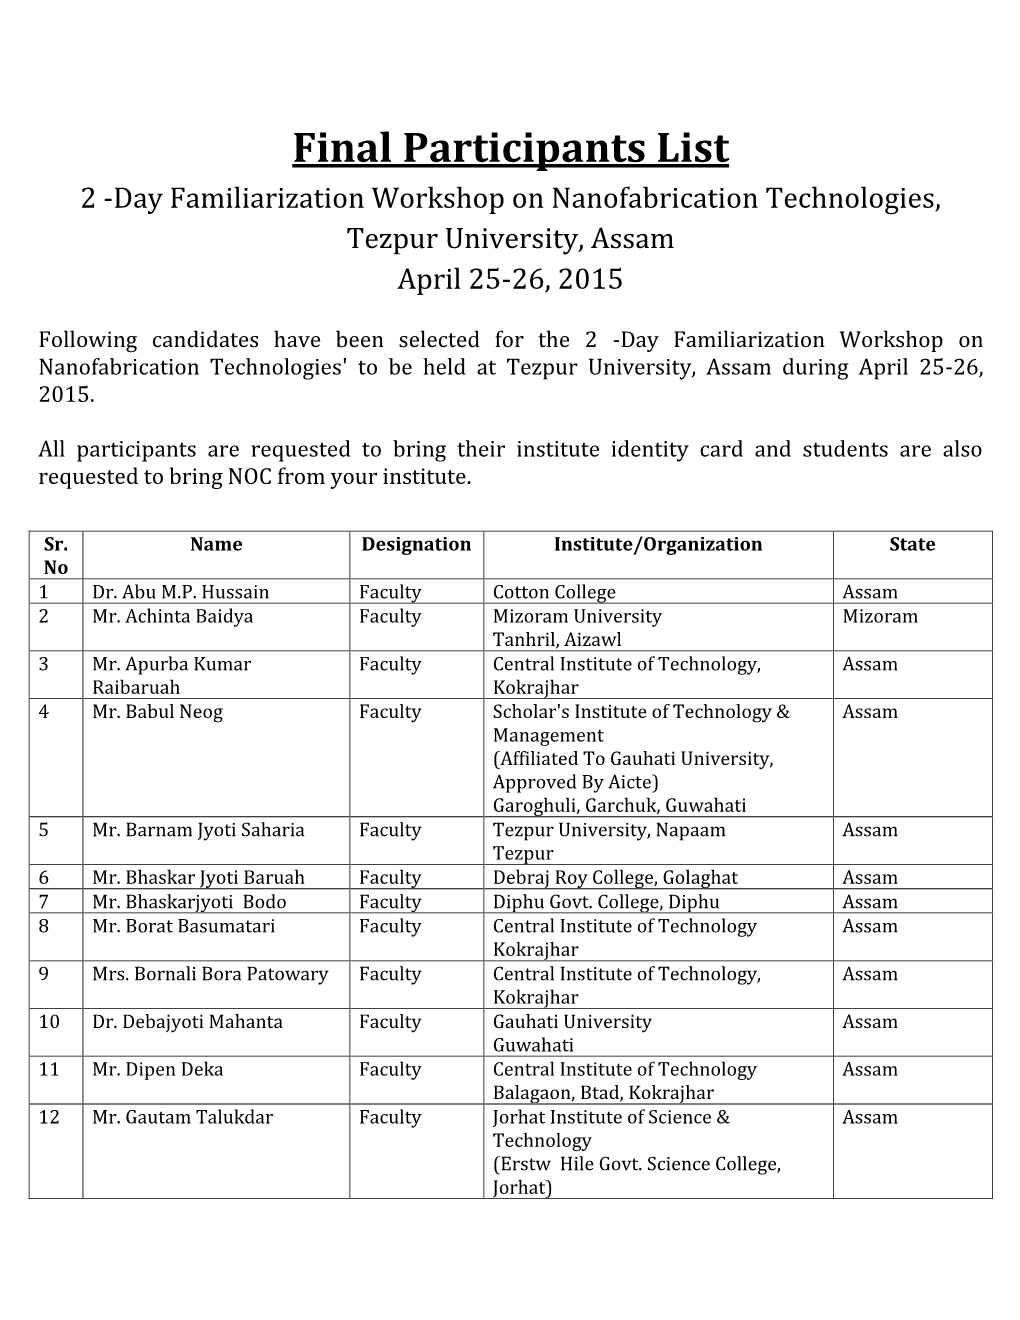 Final Participants List 2 -Day Familiarization Workshop on Nanofabrication Technologies, Tezpur University, Assam April 25-26, 2015